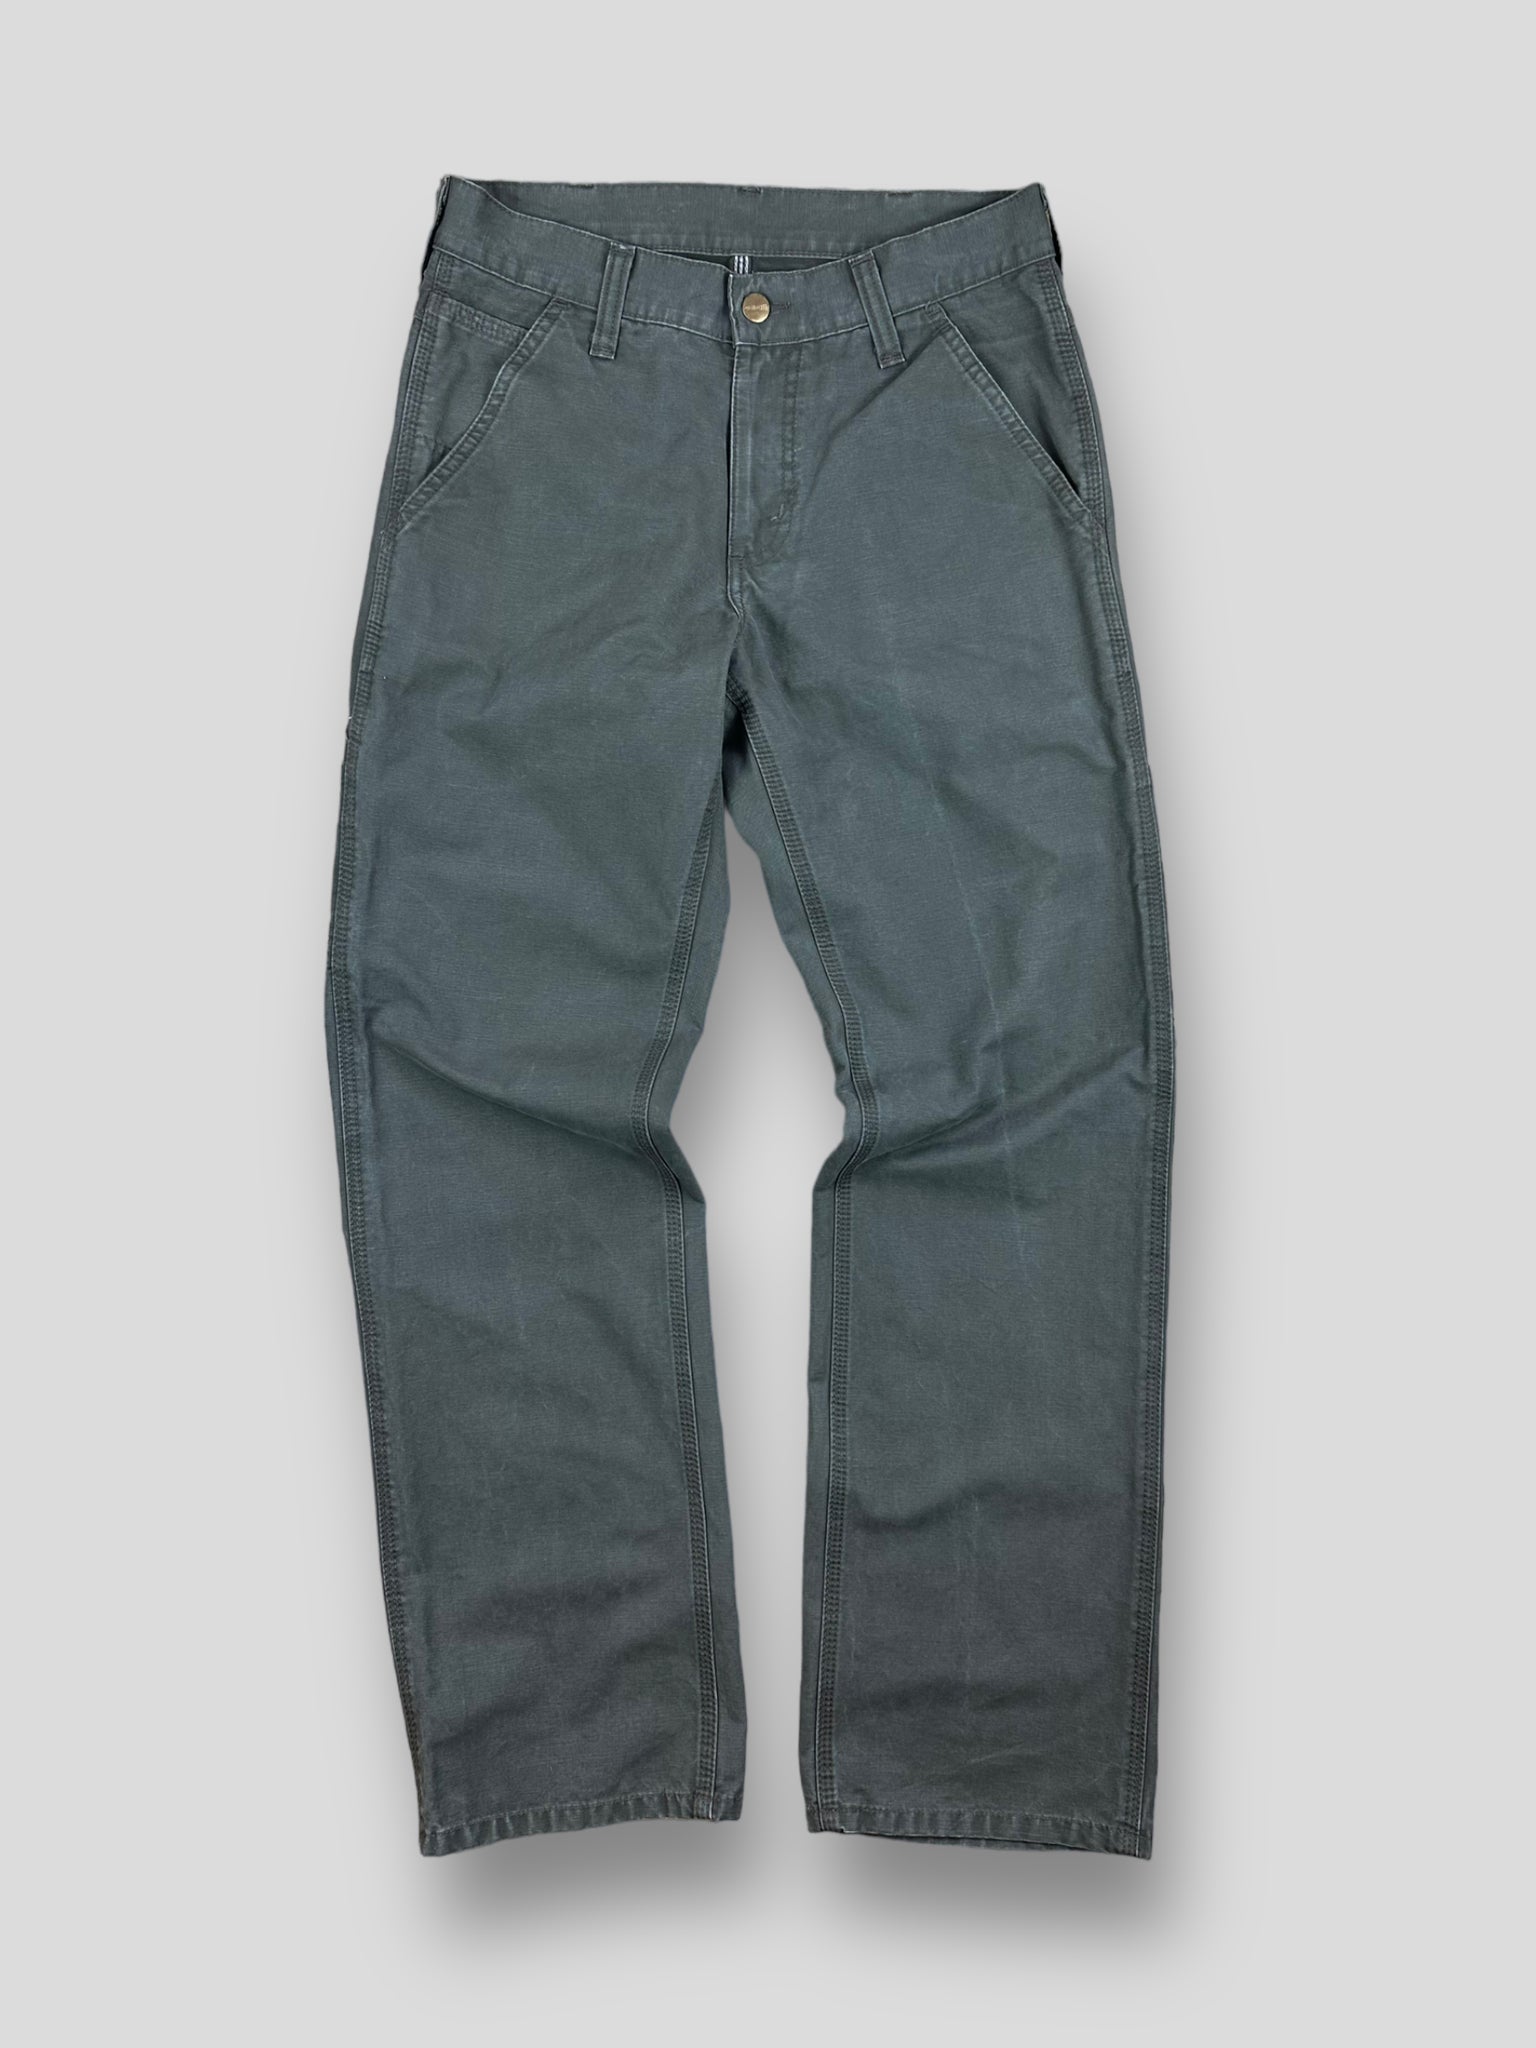 Carhartt Khaki Jeans